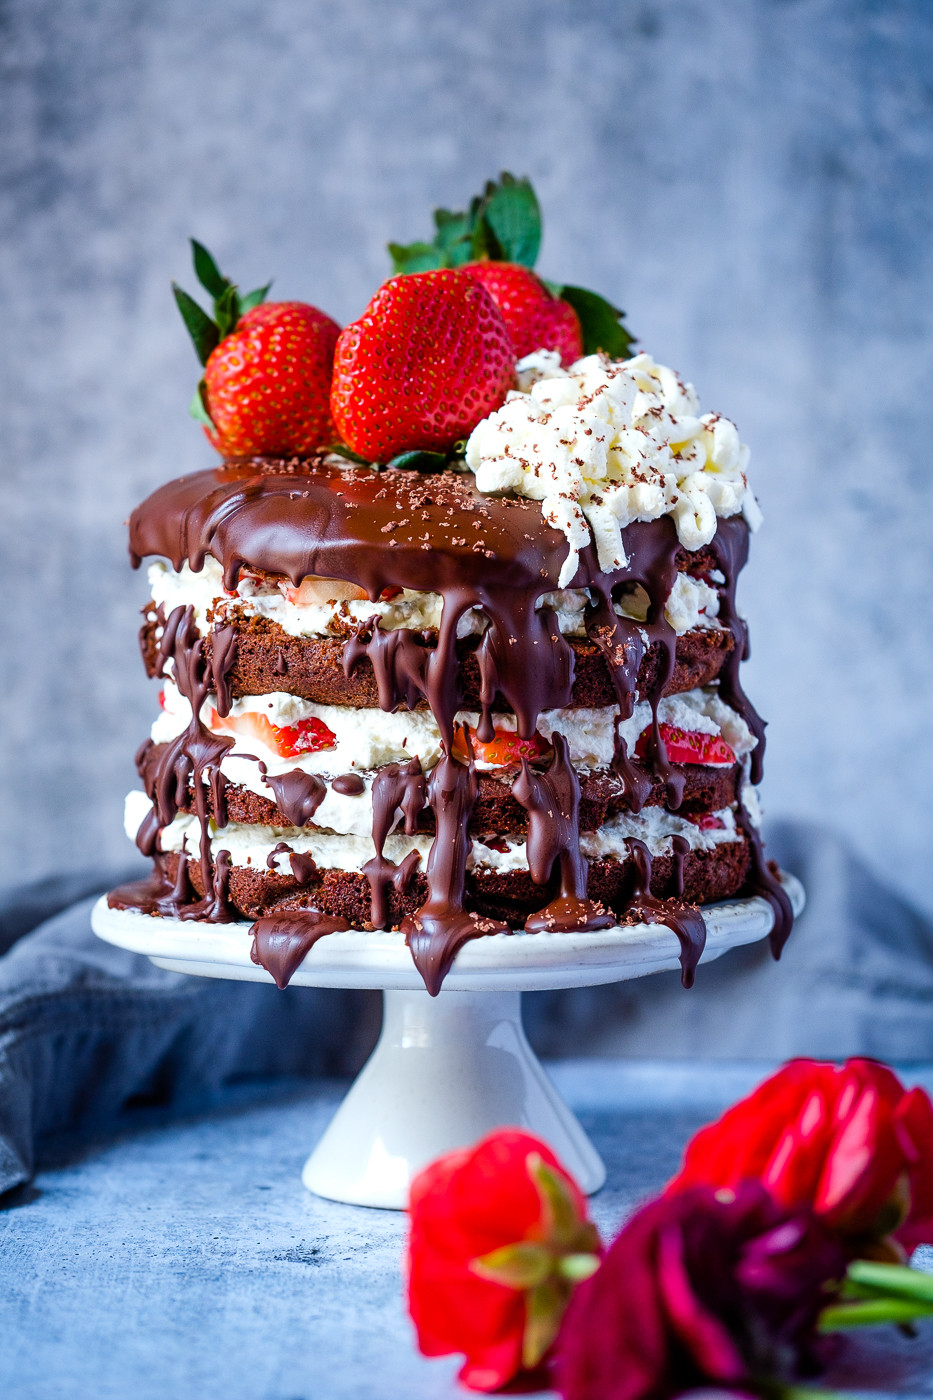 Free Pictures Of Birthday Cakes
 Lectin Free Chocolate Strawberry Birthday Cake Creative